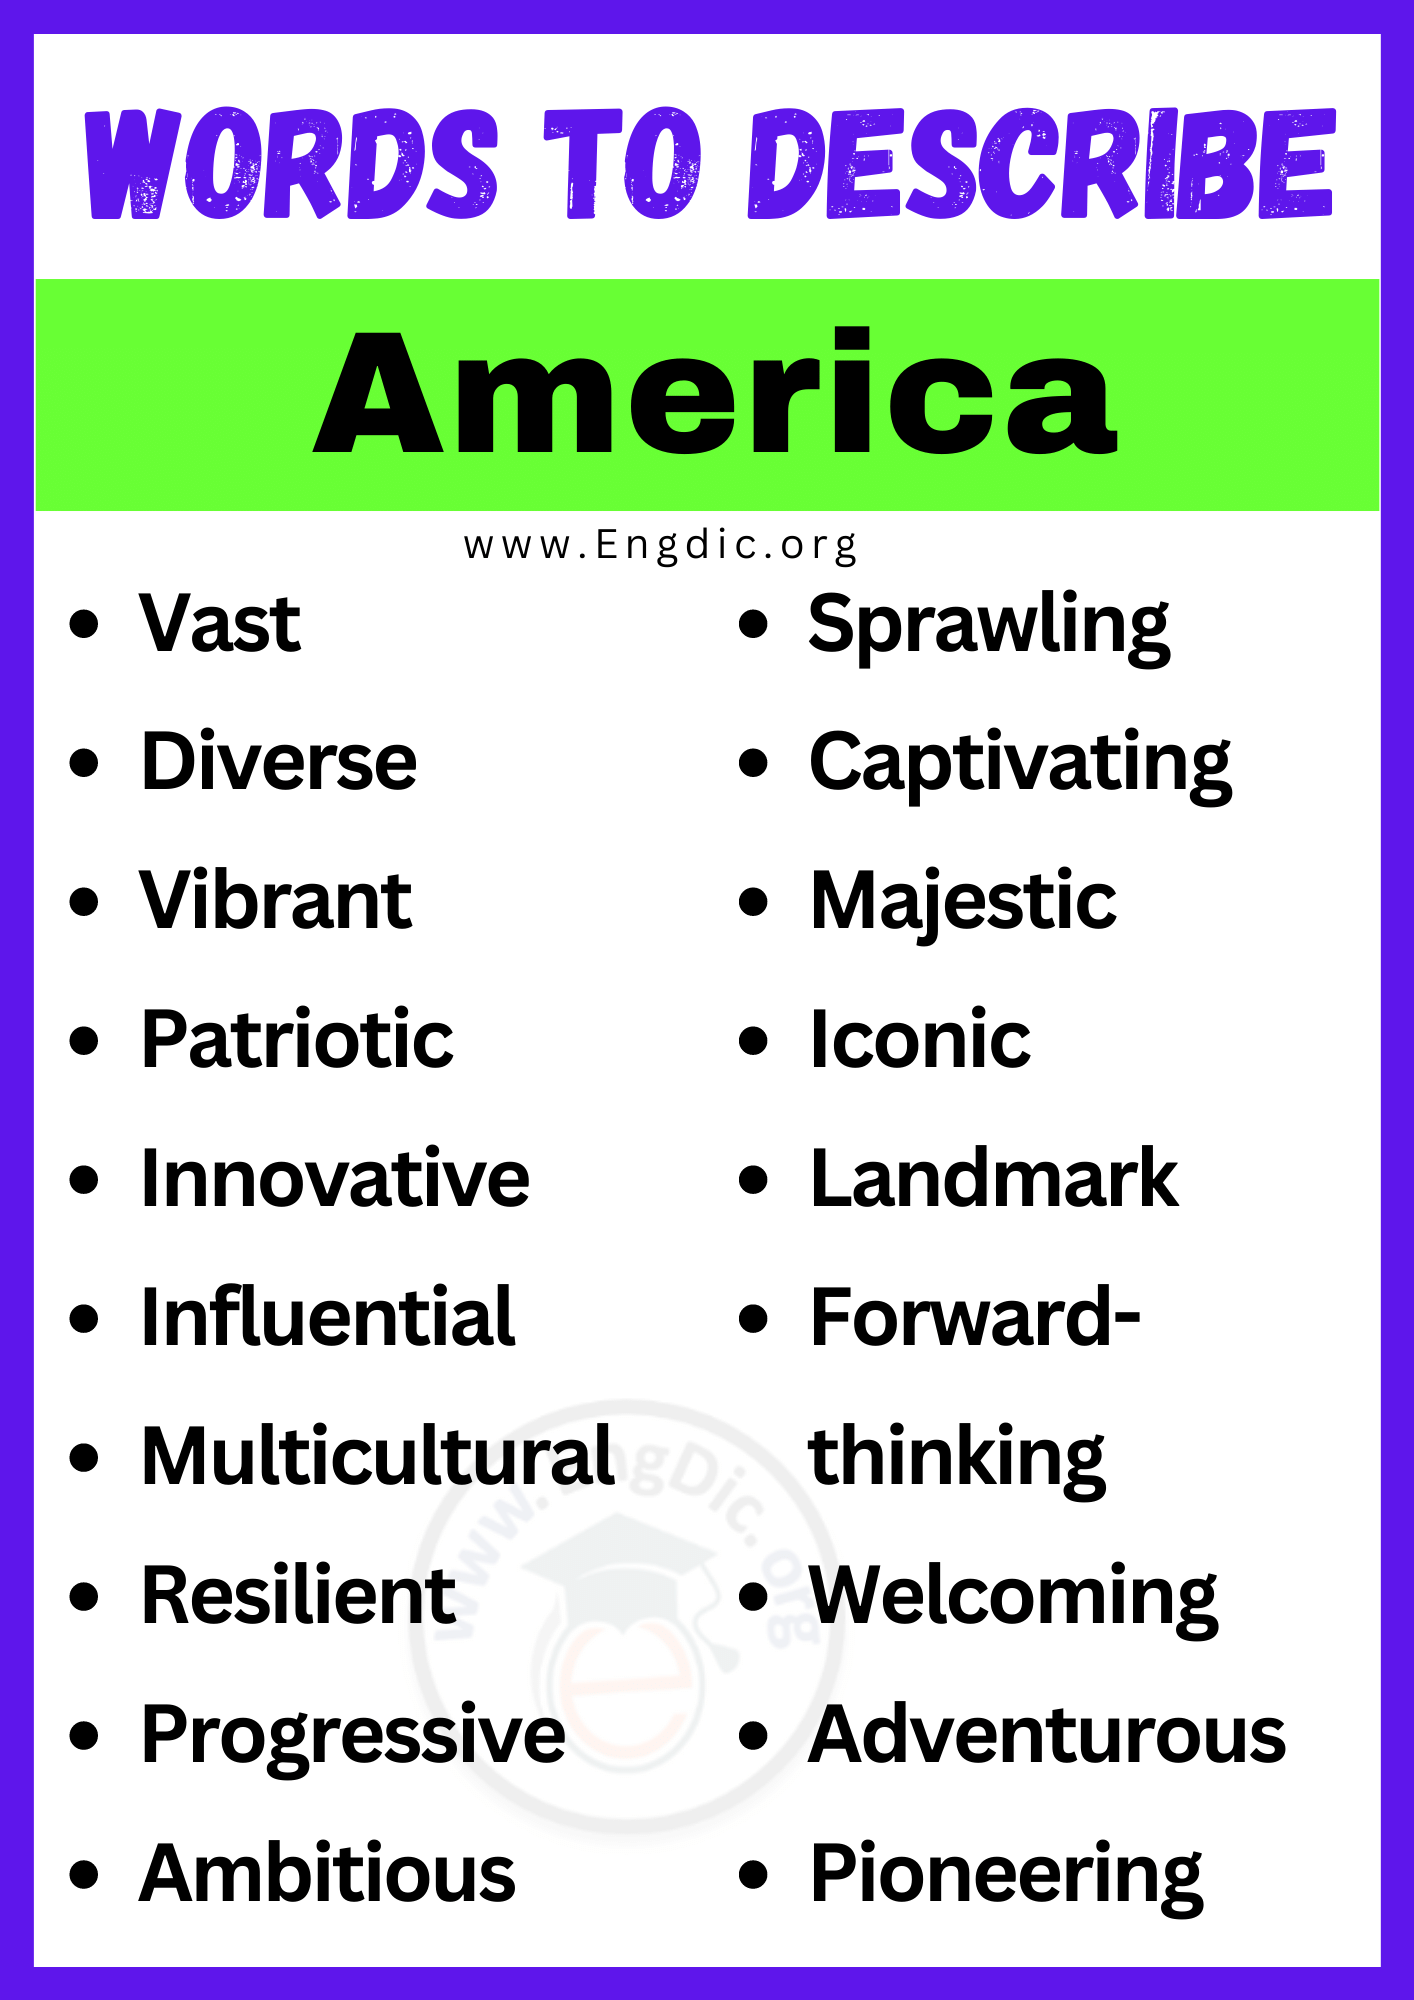 Words to Describe America